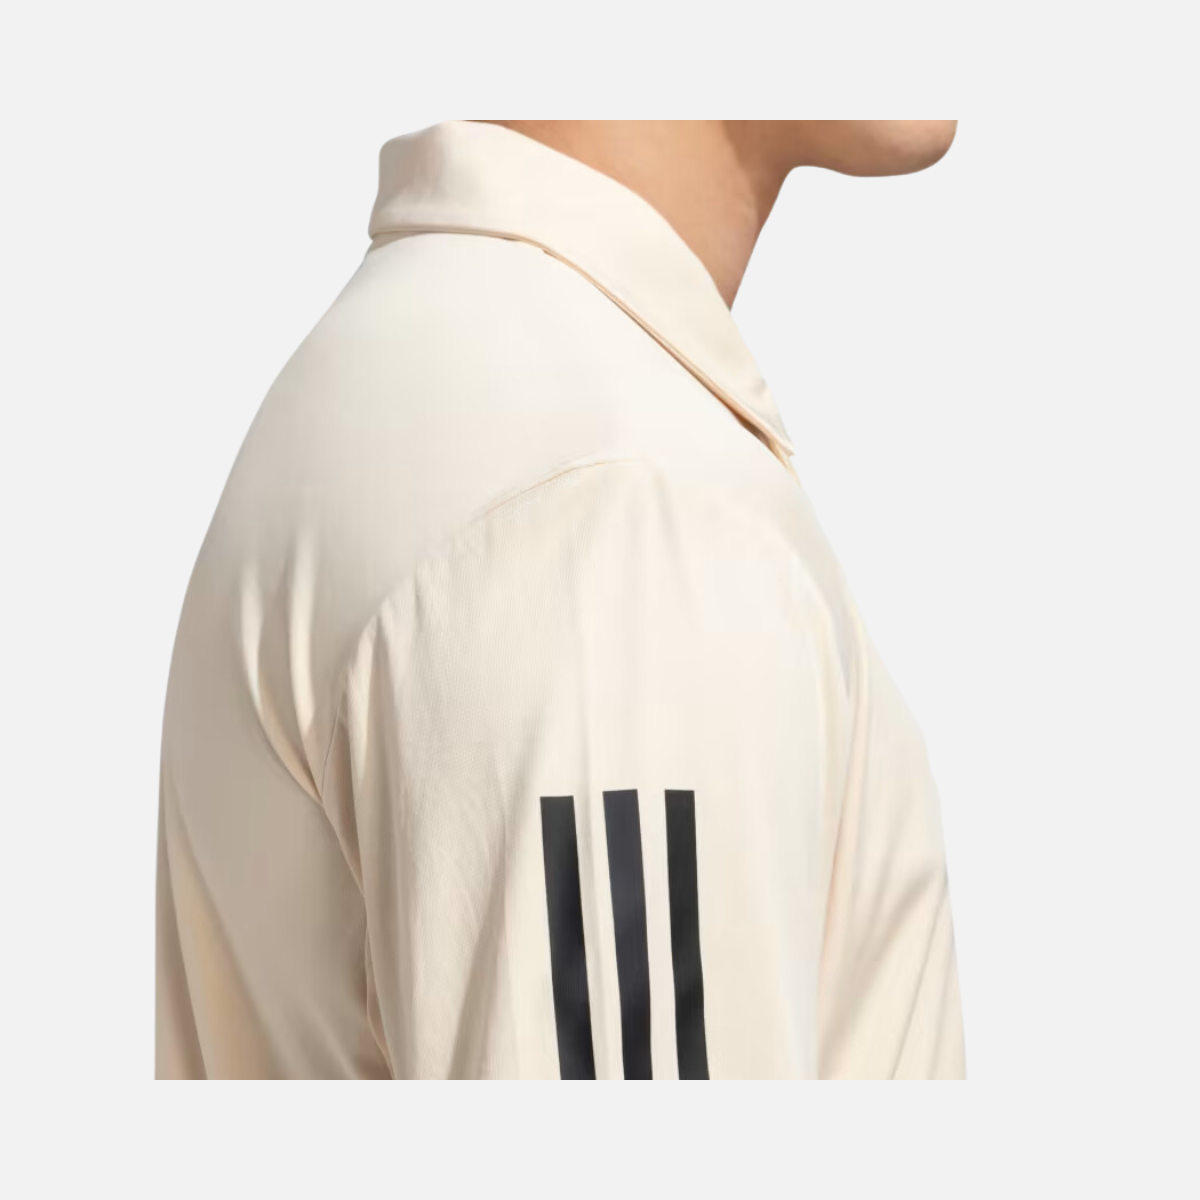 Adidas Club 3 Stripes polo Men's Tennis T-shirt -Sand Strata